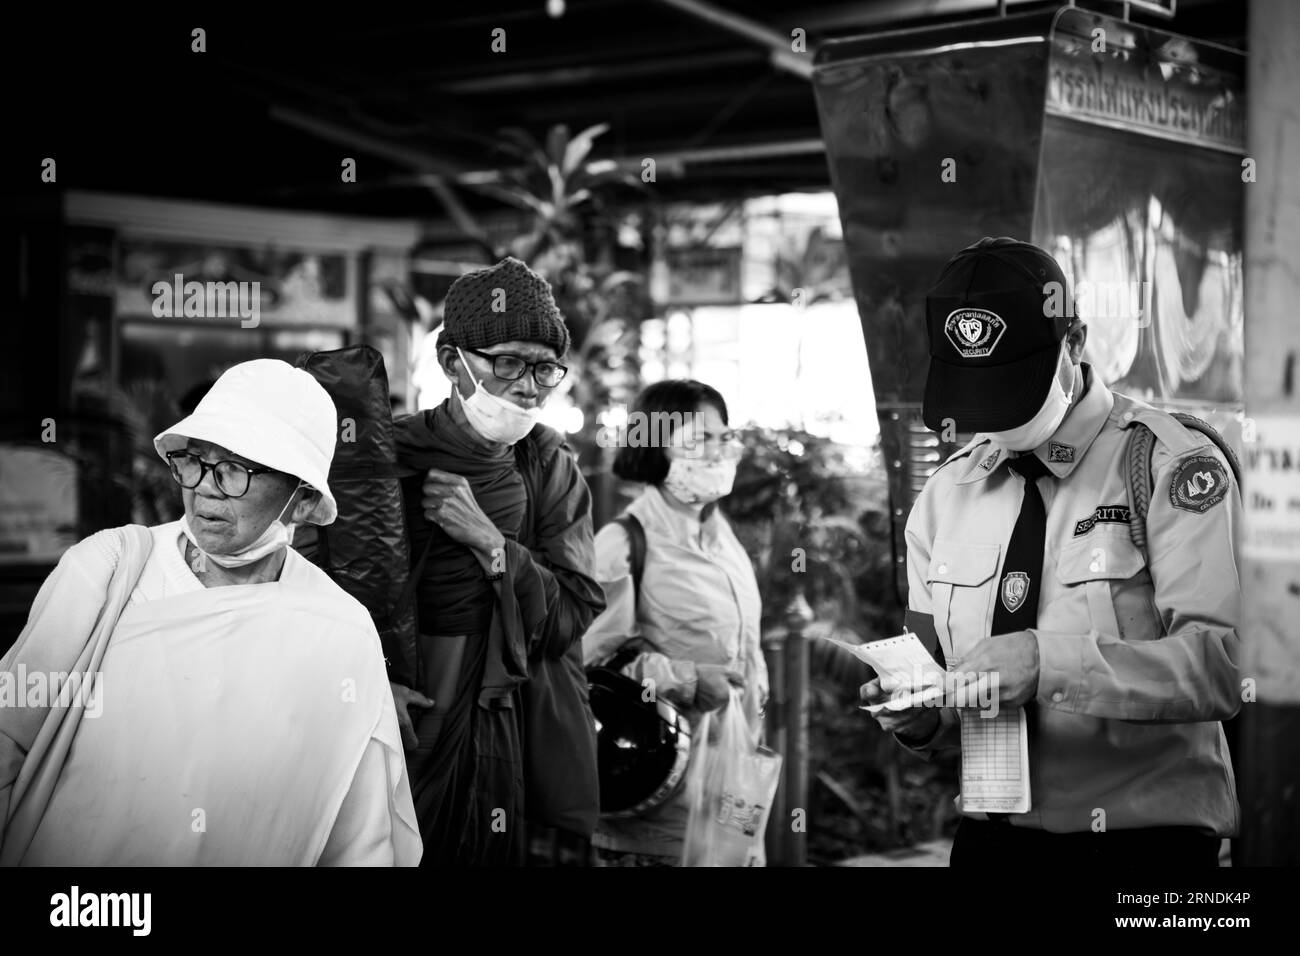 A platform attendant at Hua Lamphong Railway Station in Bangkok captured holding and examining a ticket while assisting travelers. Stock Photo